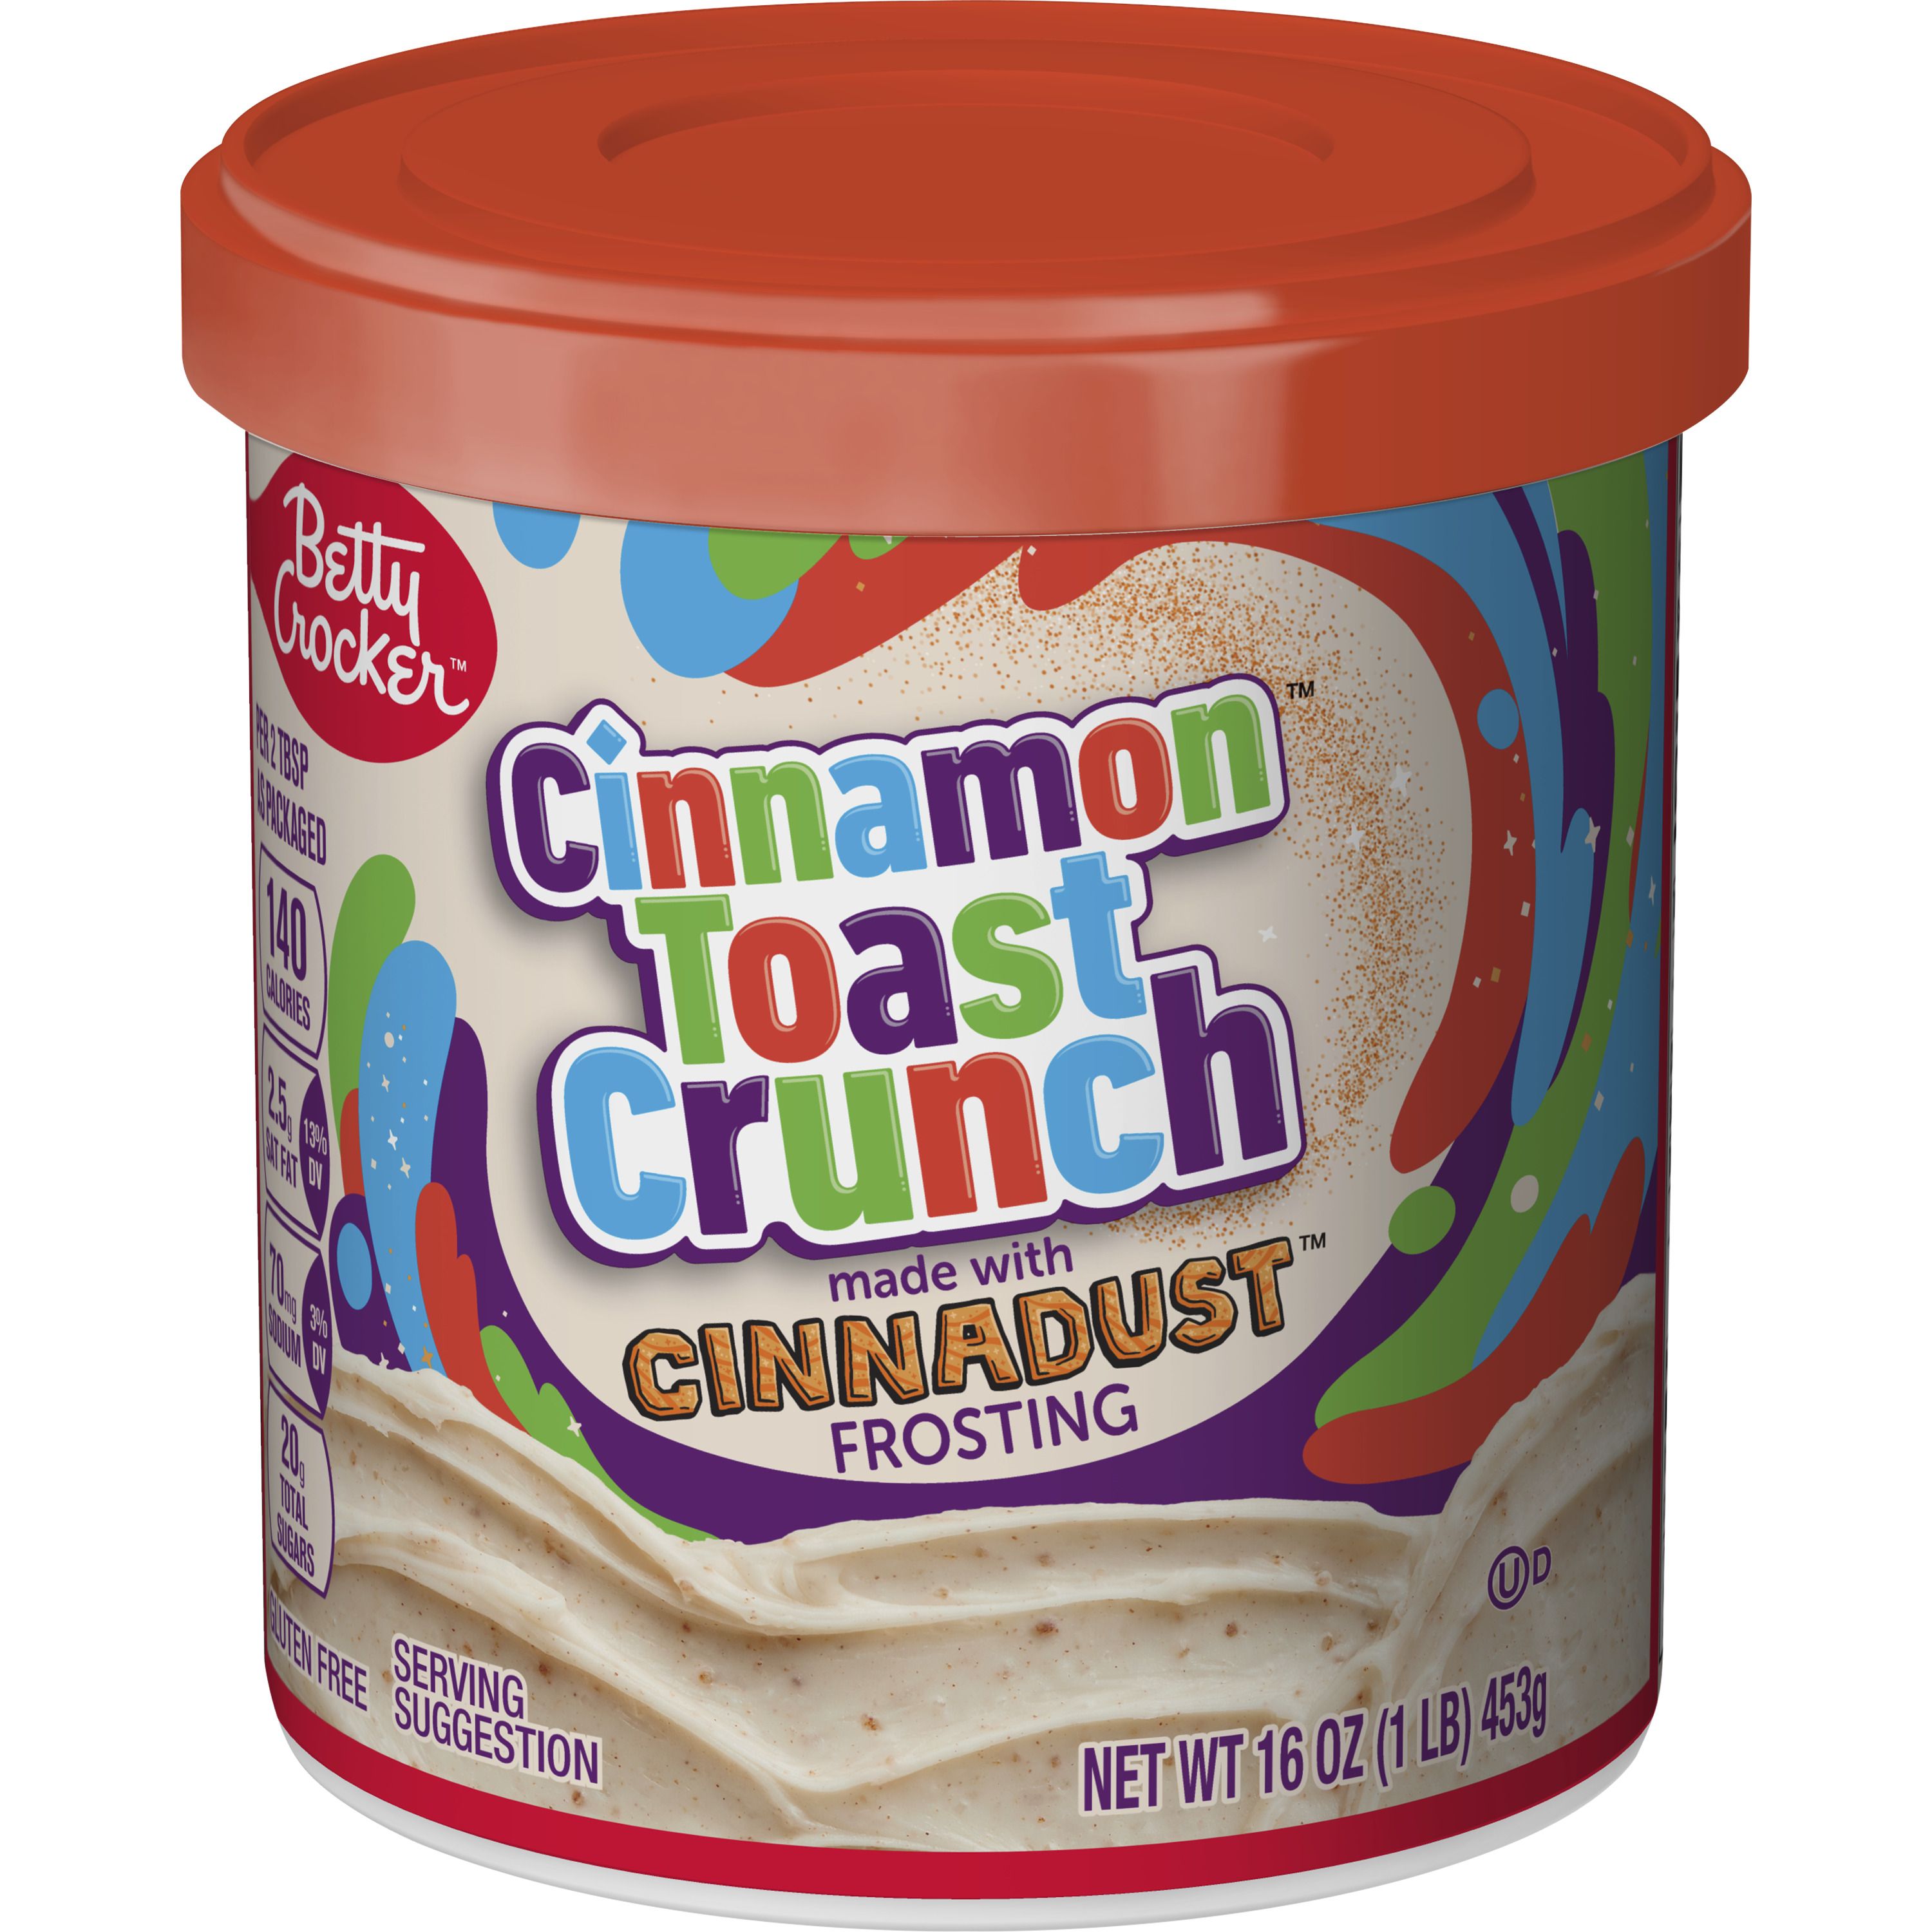 Betty Crocker Cinnamon Toast Crunch Frosting, Made with Cinnadust, 16 oz - Front